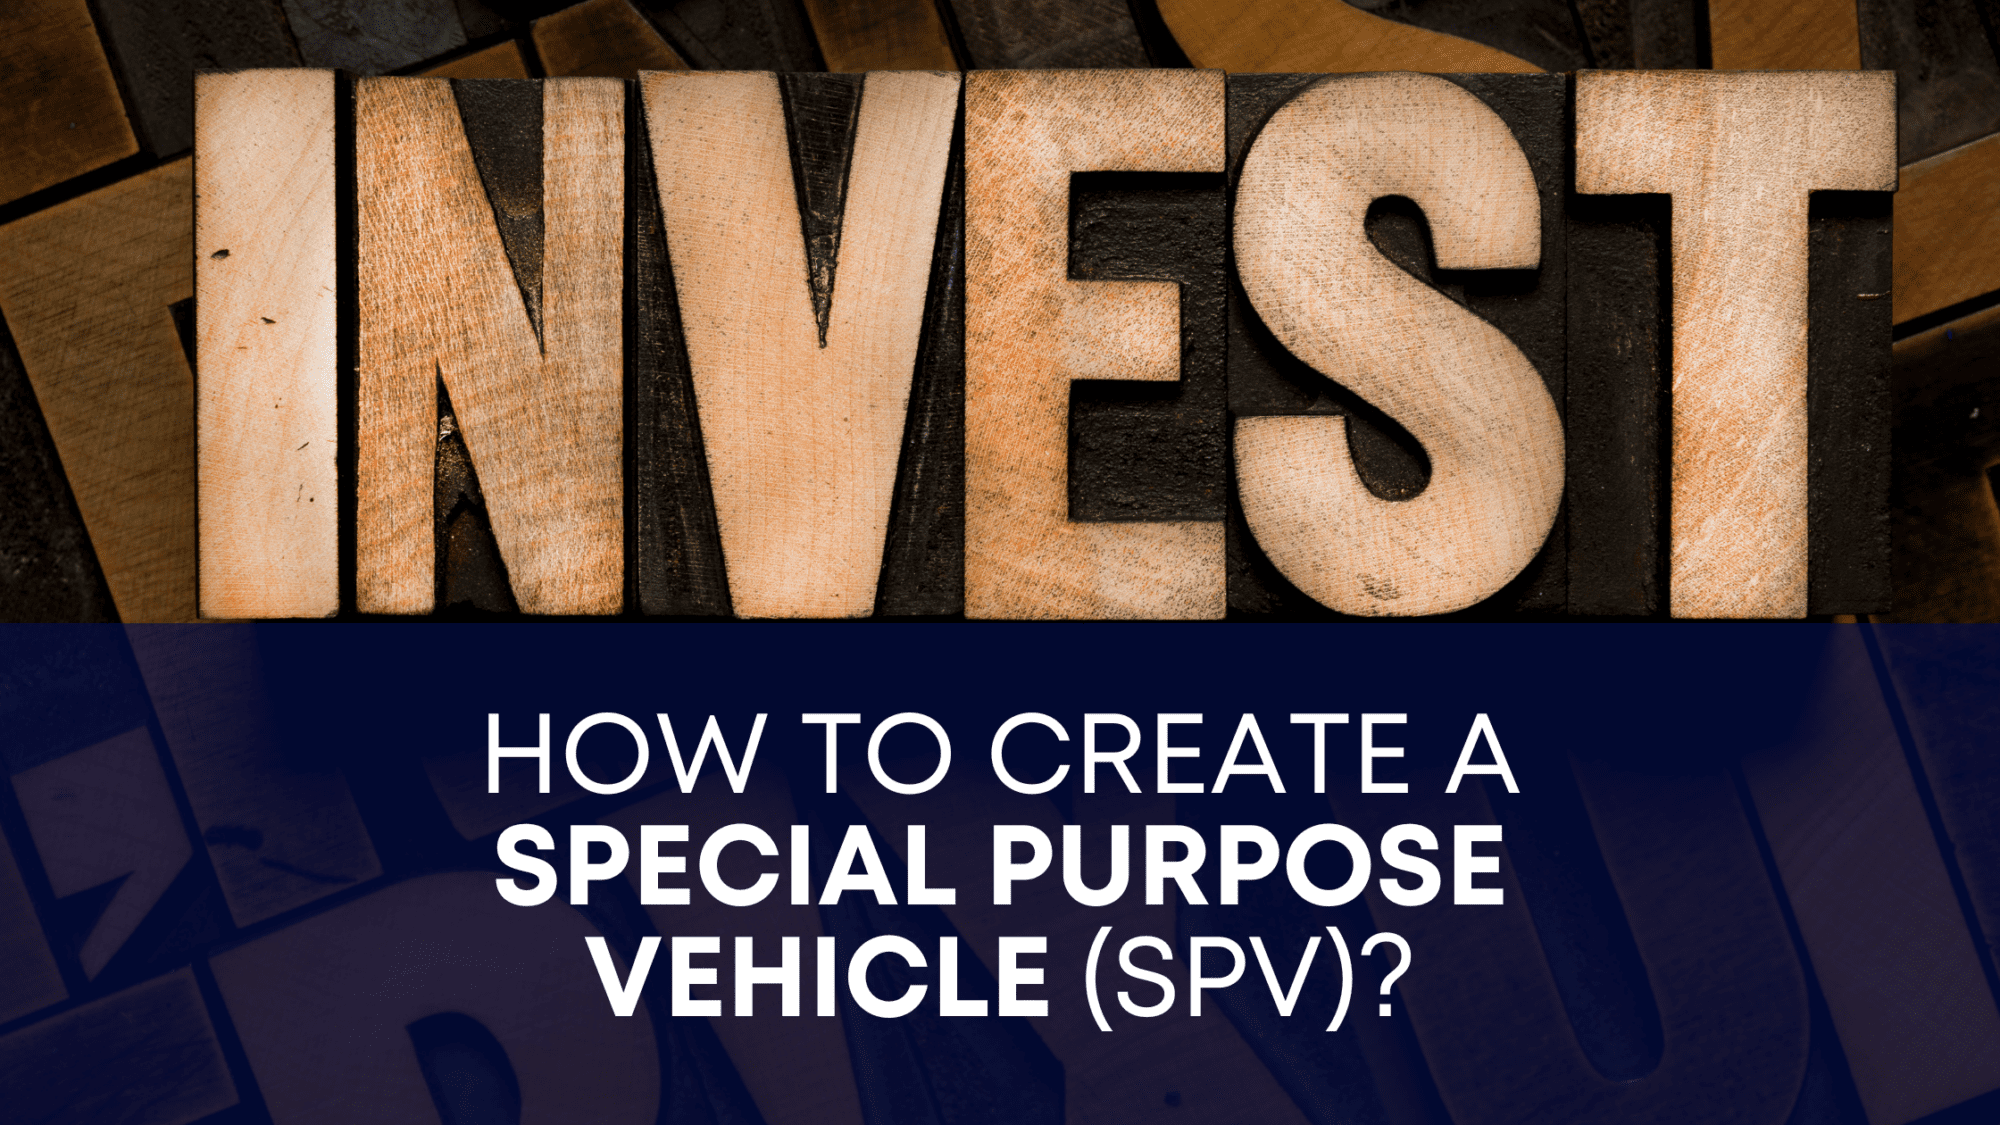 SPV (Special Purpose Vehicle)